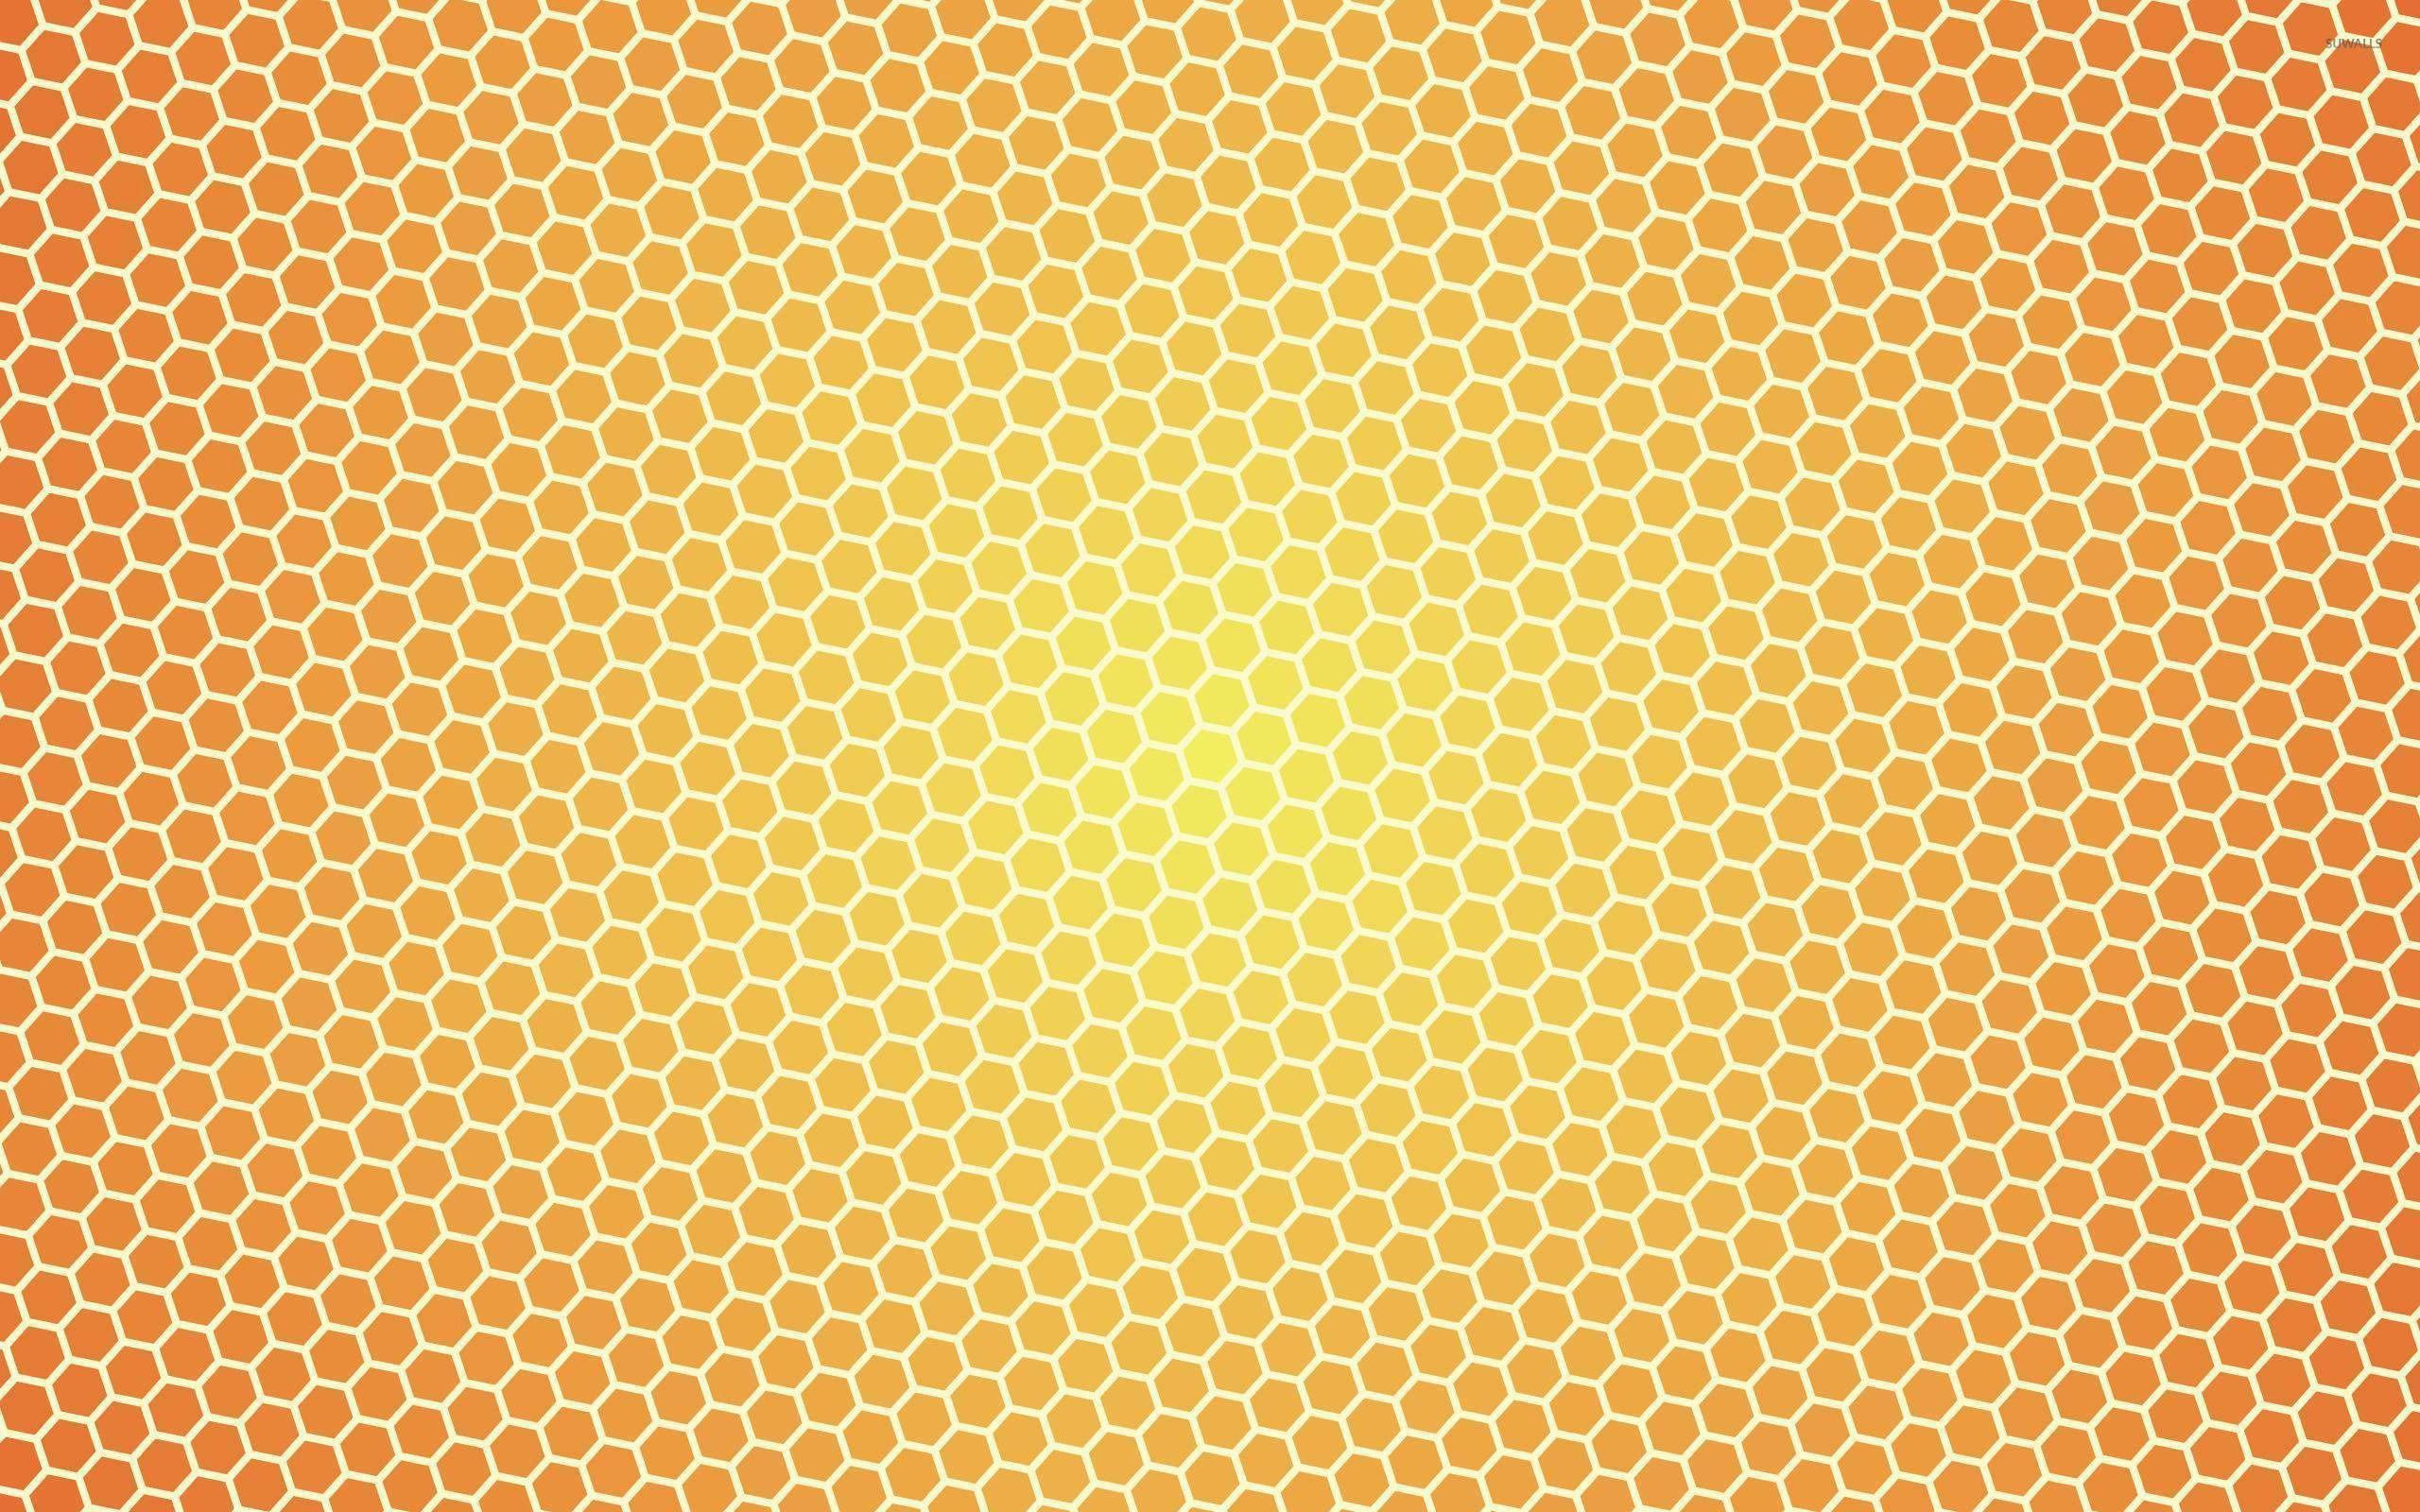 Honey Wallpaper HD 44057 1920x1200px